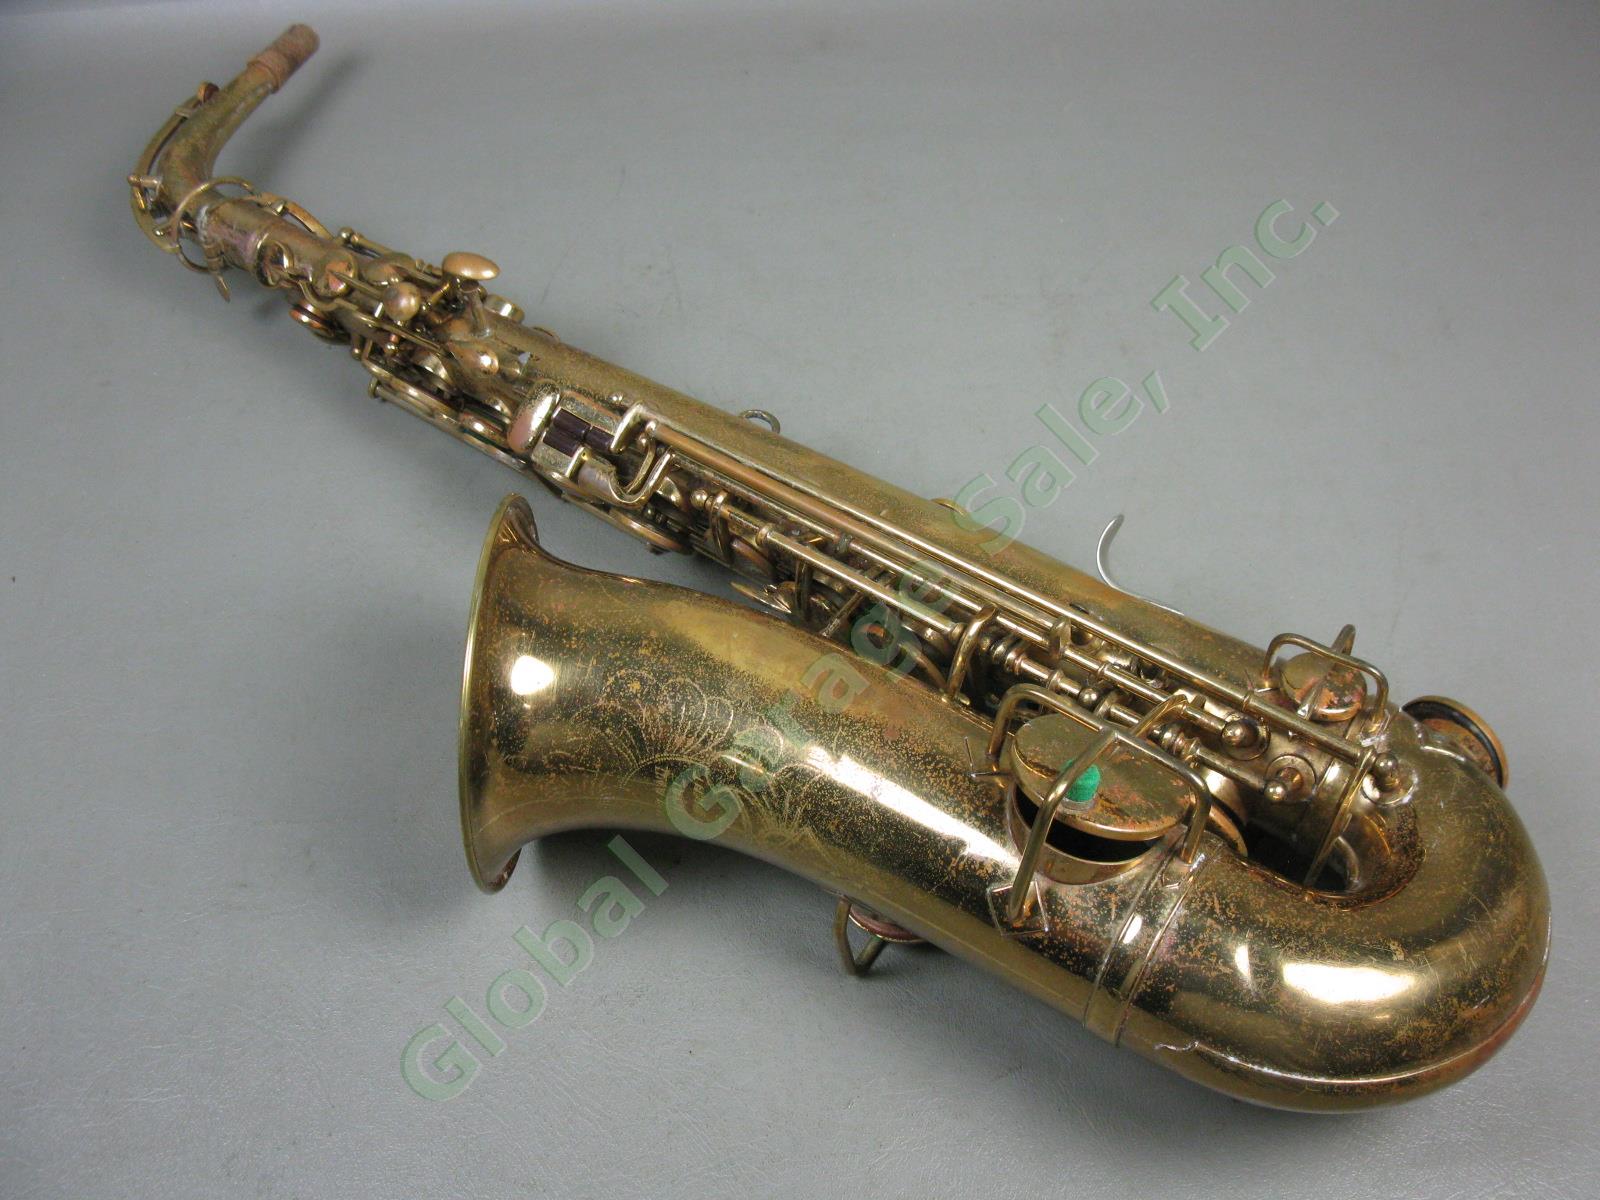 Vtg Antique 1919-1930 Cleveland Alto Saxophone Serial C-29375 As-Is Parts/Repair 5